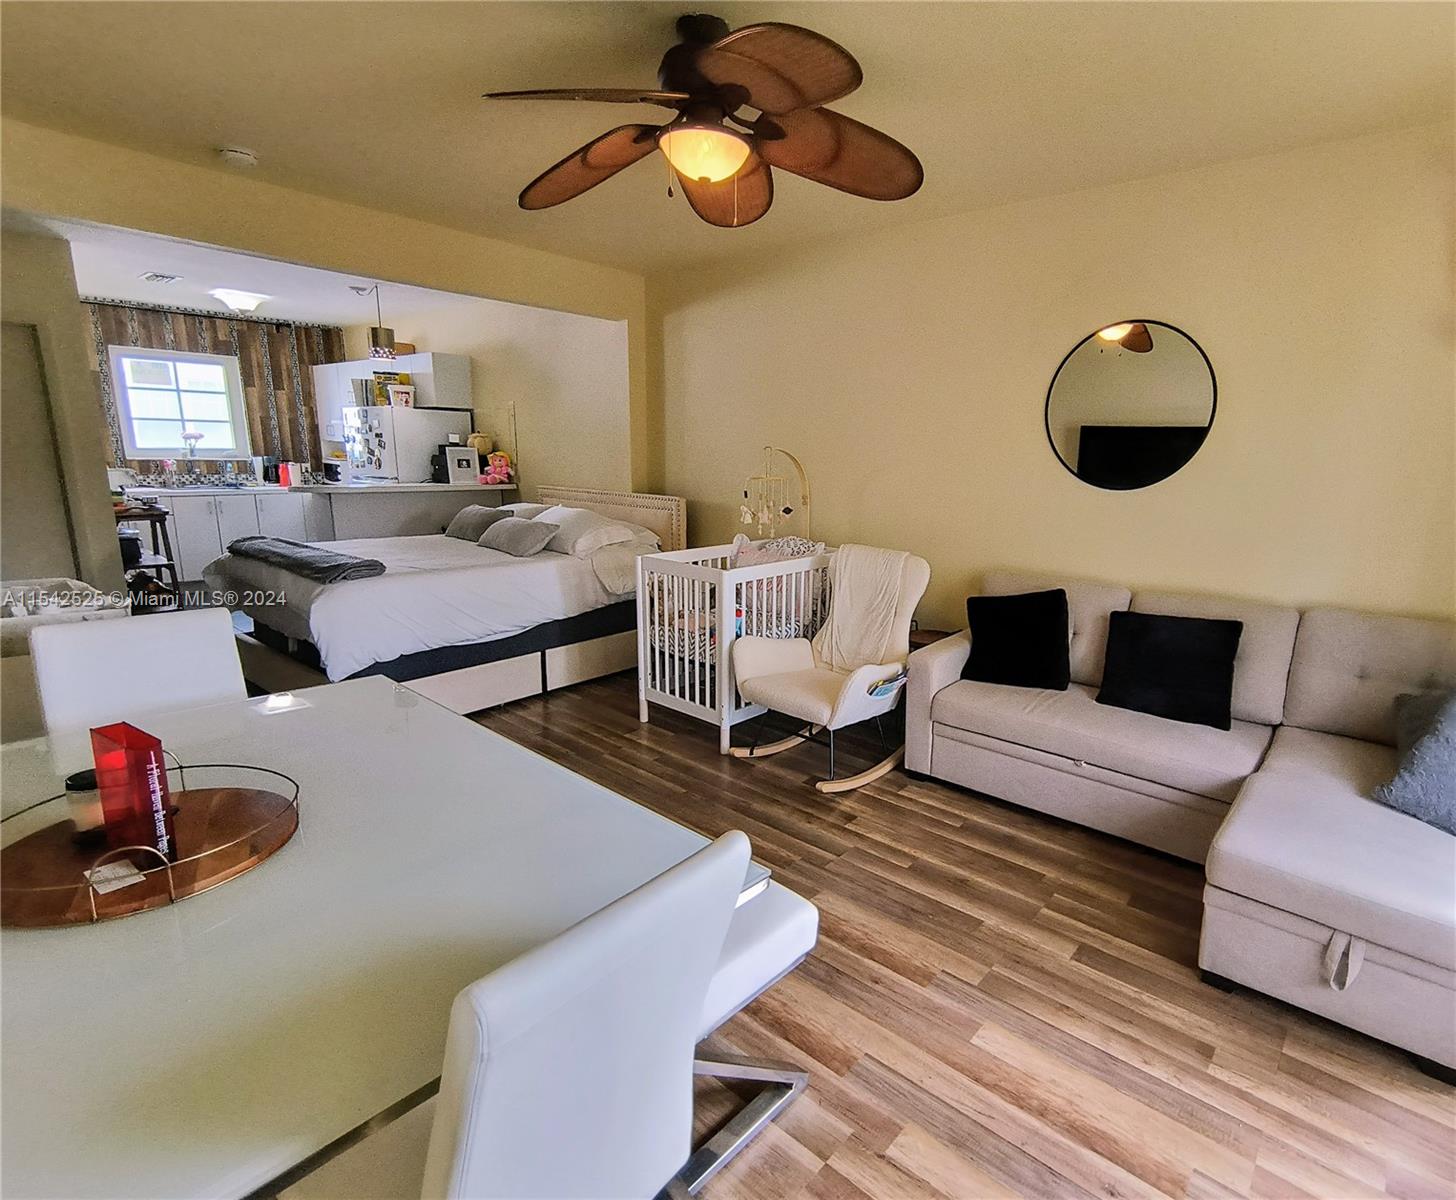 Rental Property at 833 10th St St 203, Miami Beach, Miami-Dade County, Florida - Bathrooms: 1  - $1,800 MO.